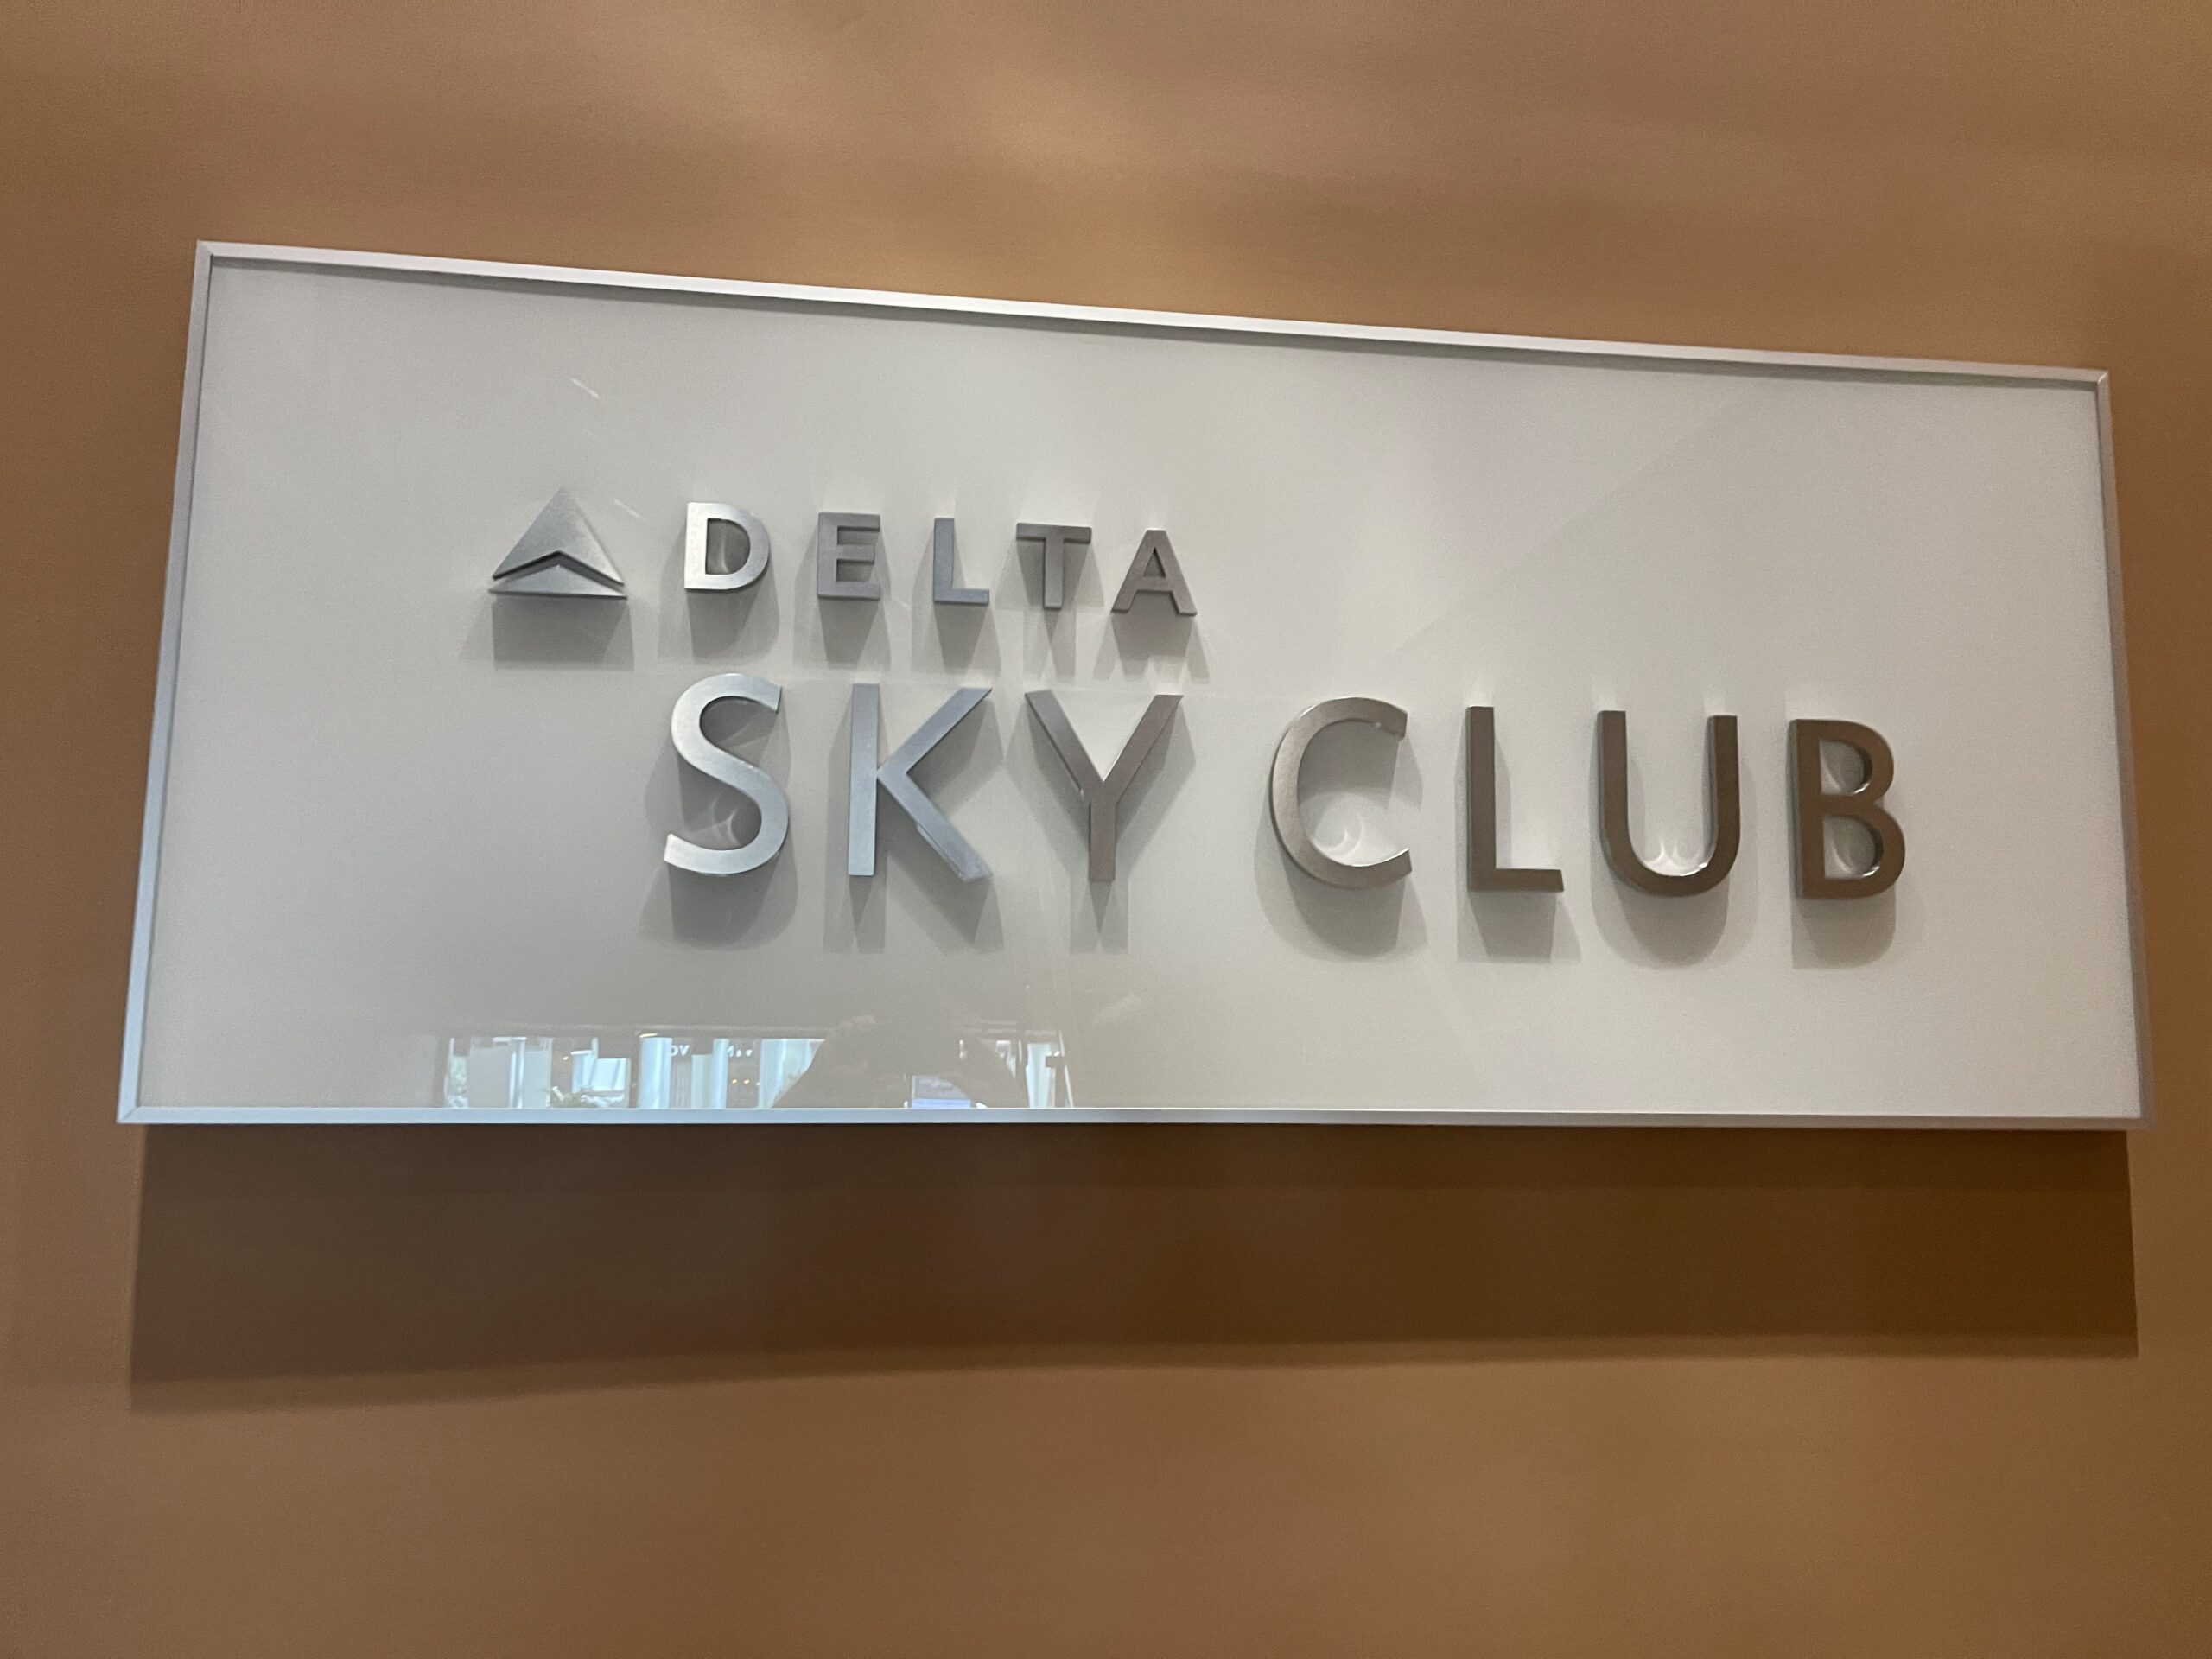 Delta Sky Club Credit Image David Andrews